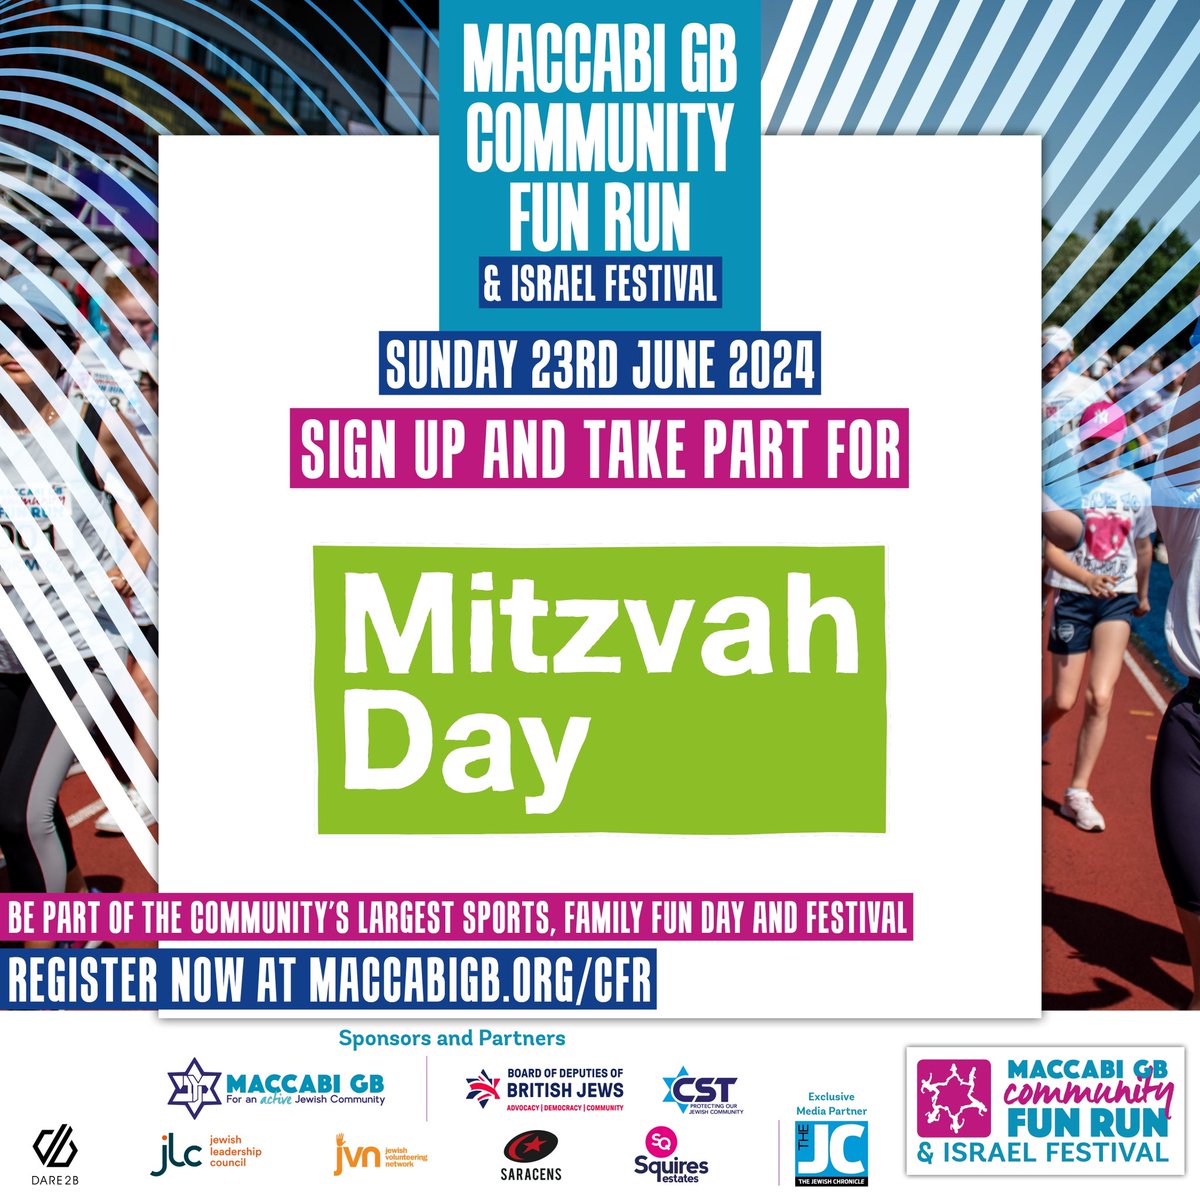 Support Mitzvah Day at the @maccabigb Community Fun Run this summer! maccabigb.org/cfr